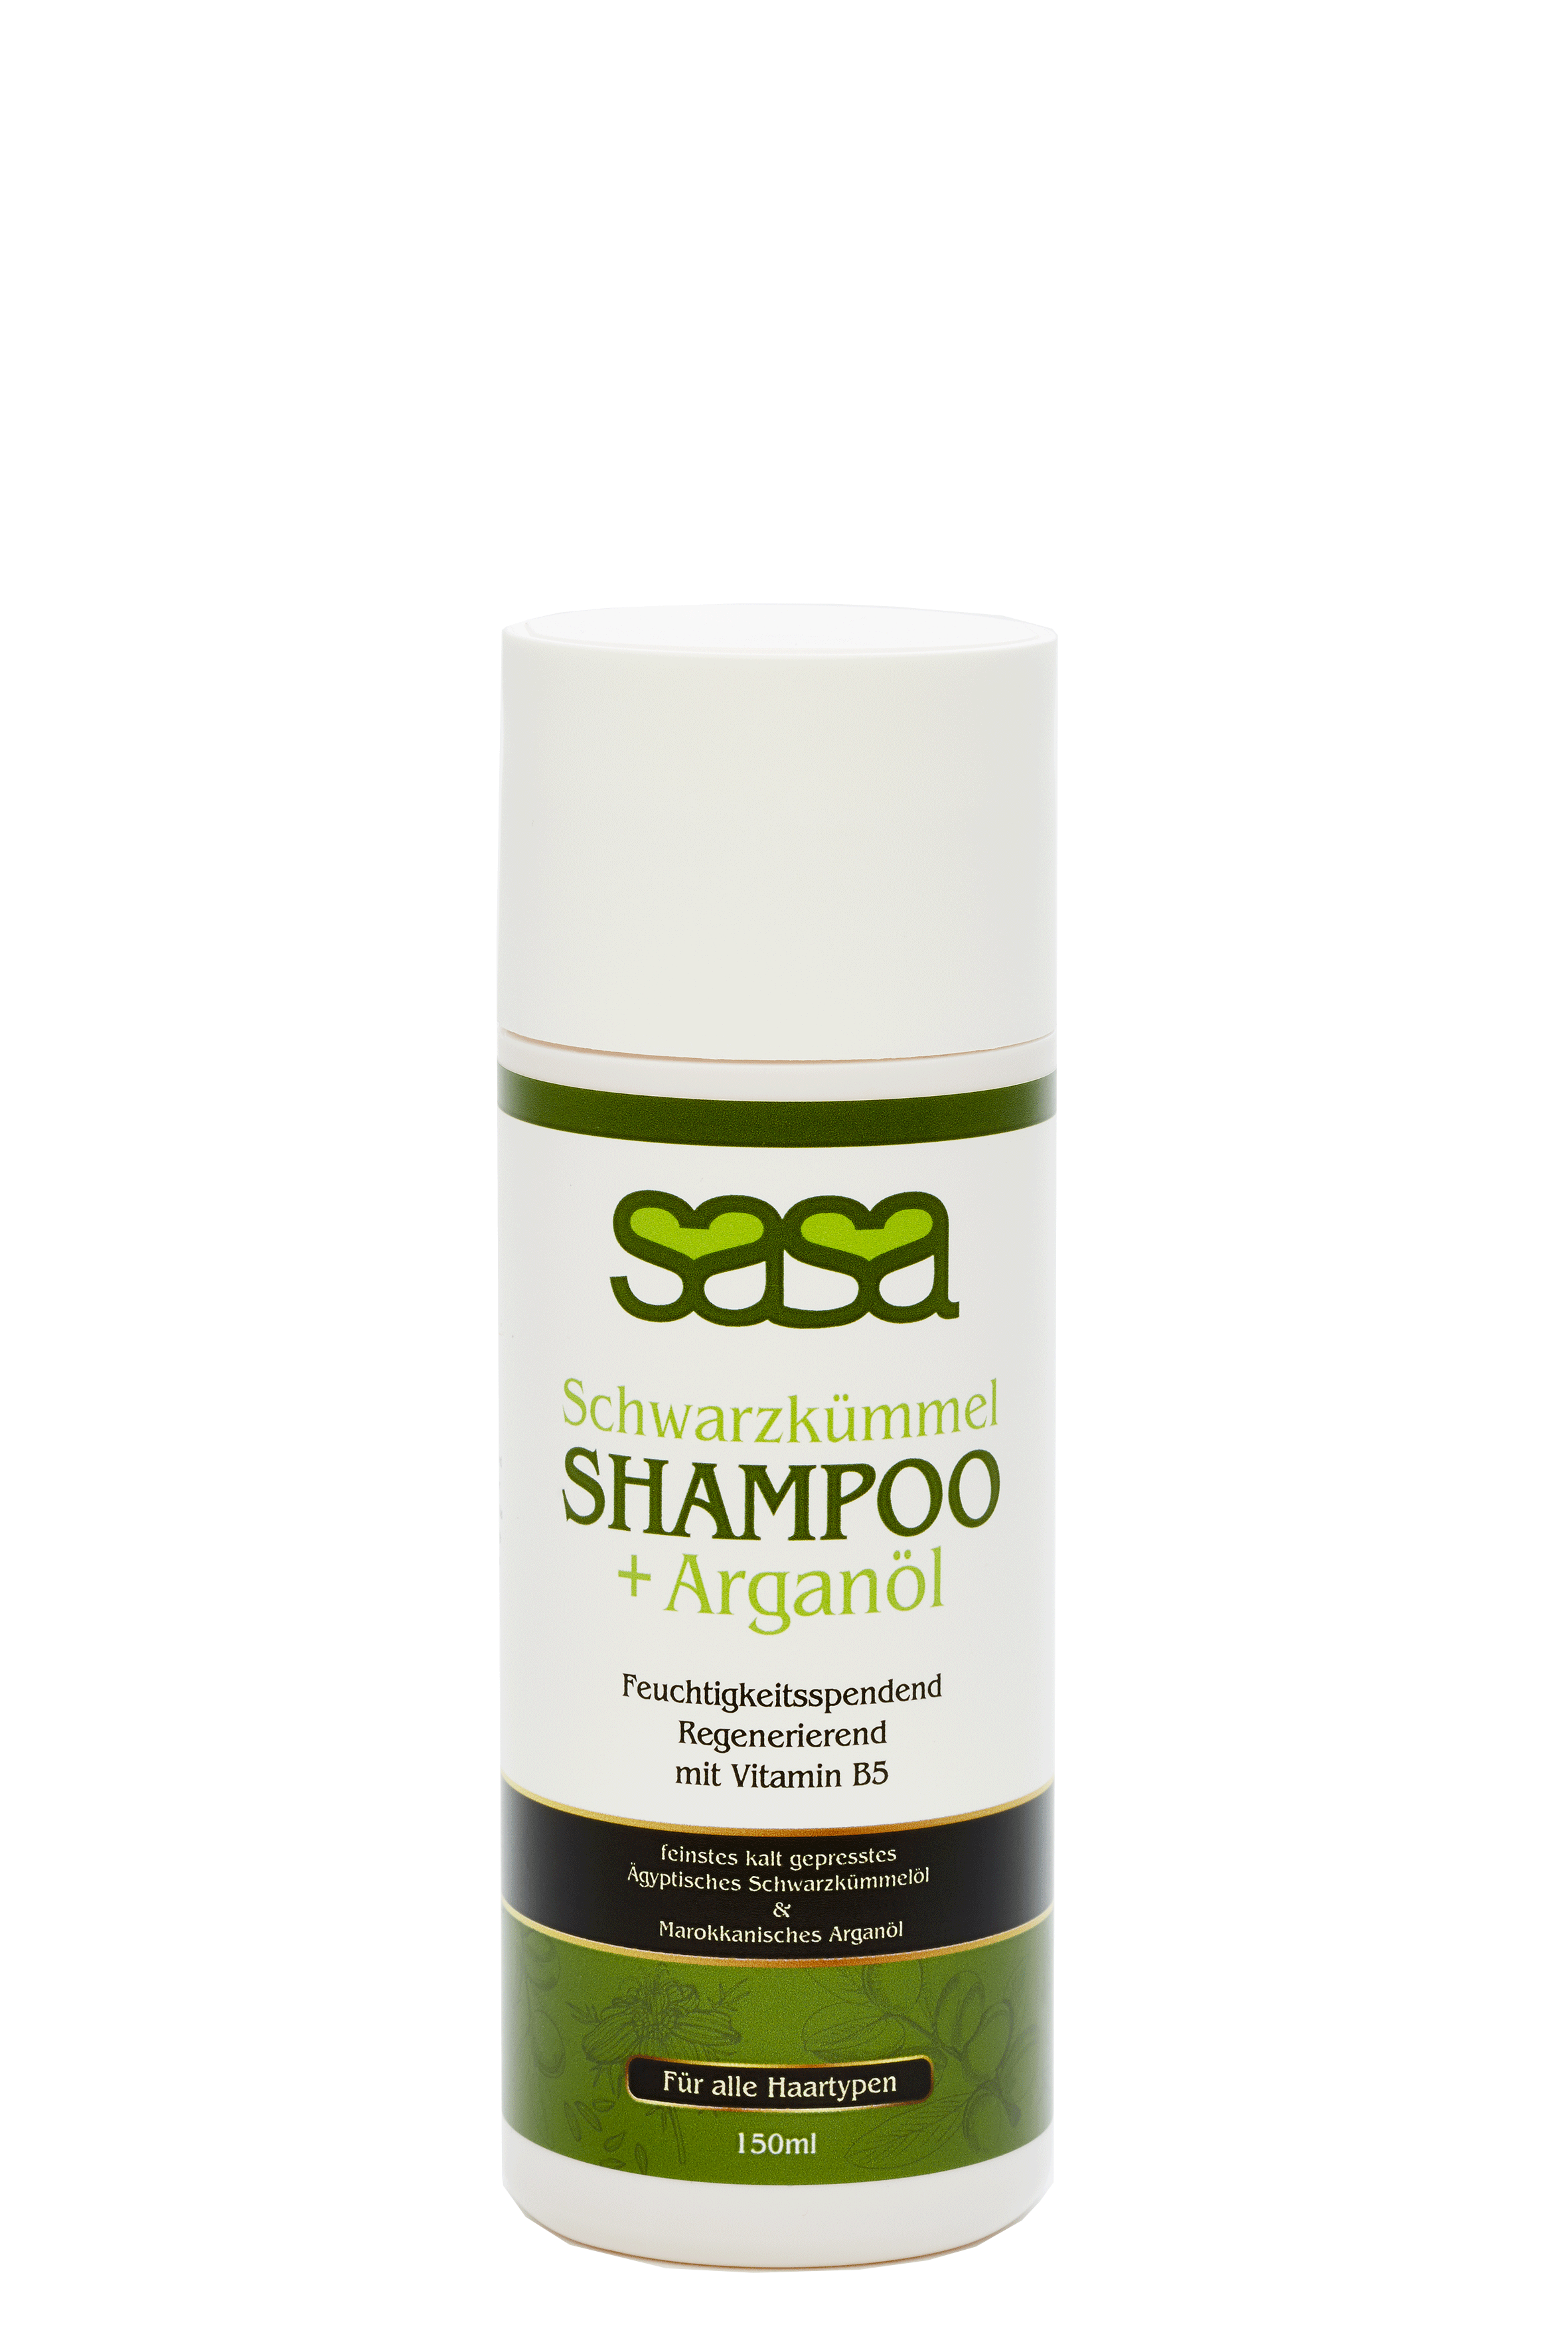 Black cumin oil shampoo with argan oil